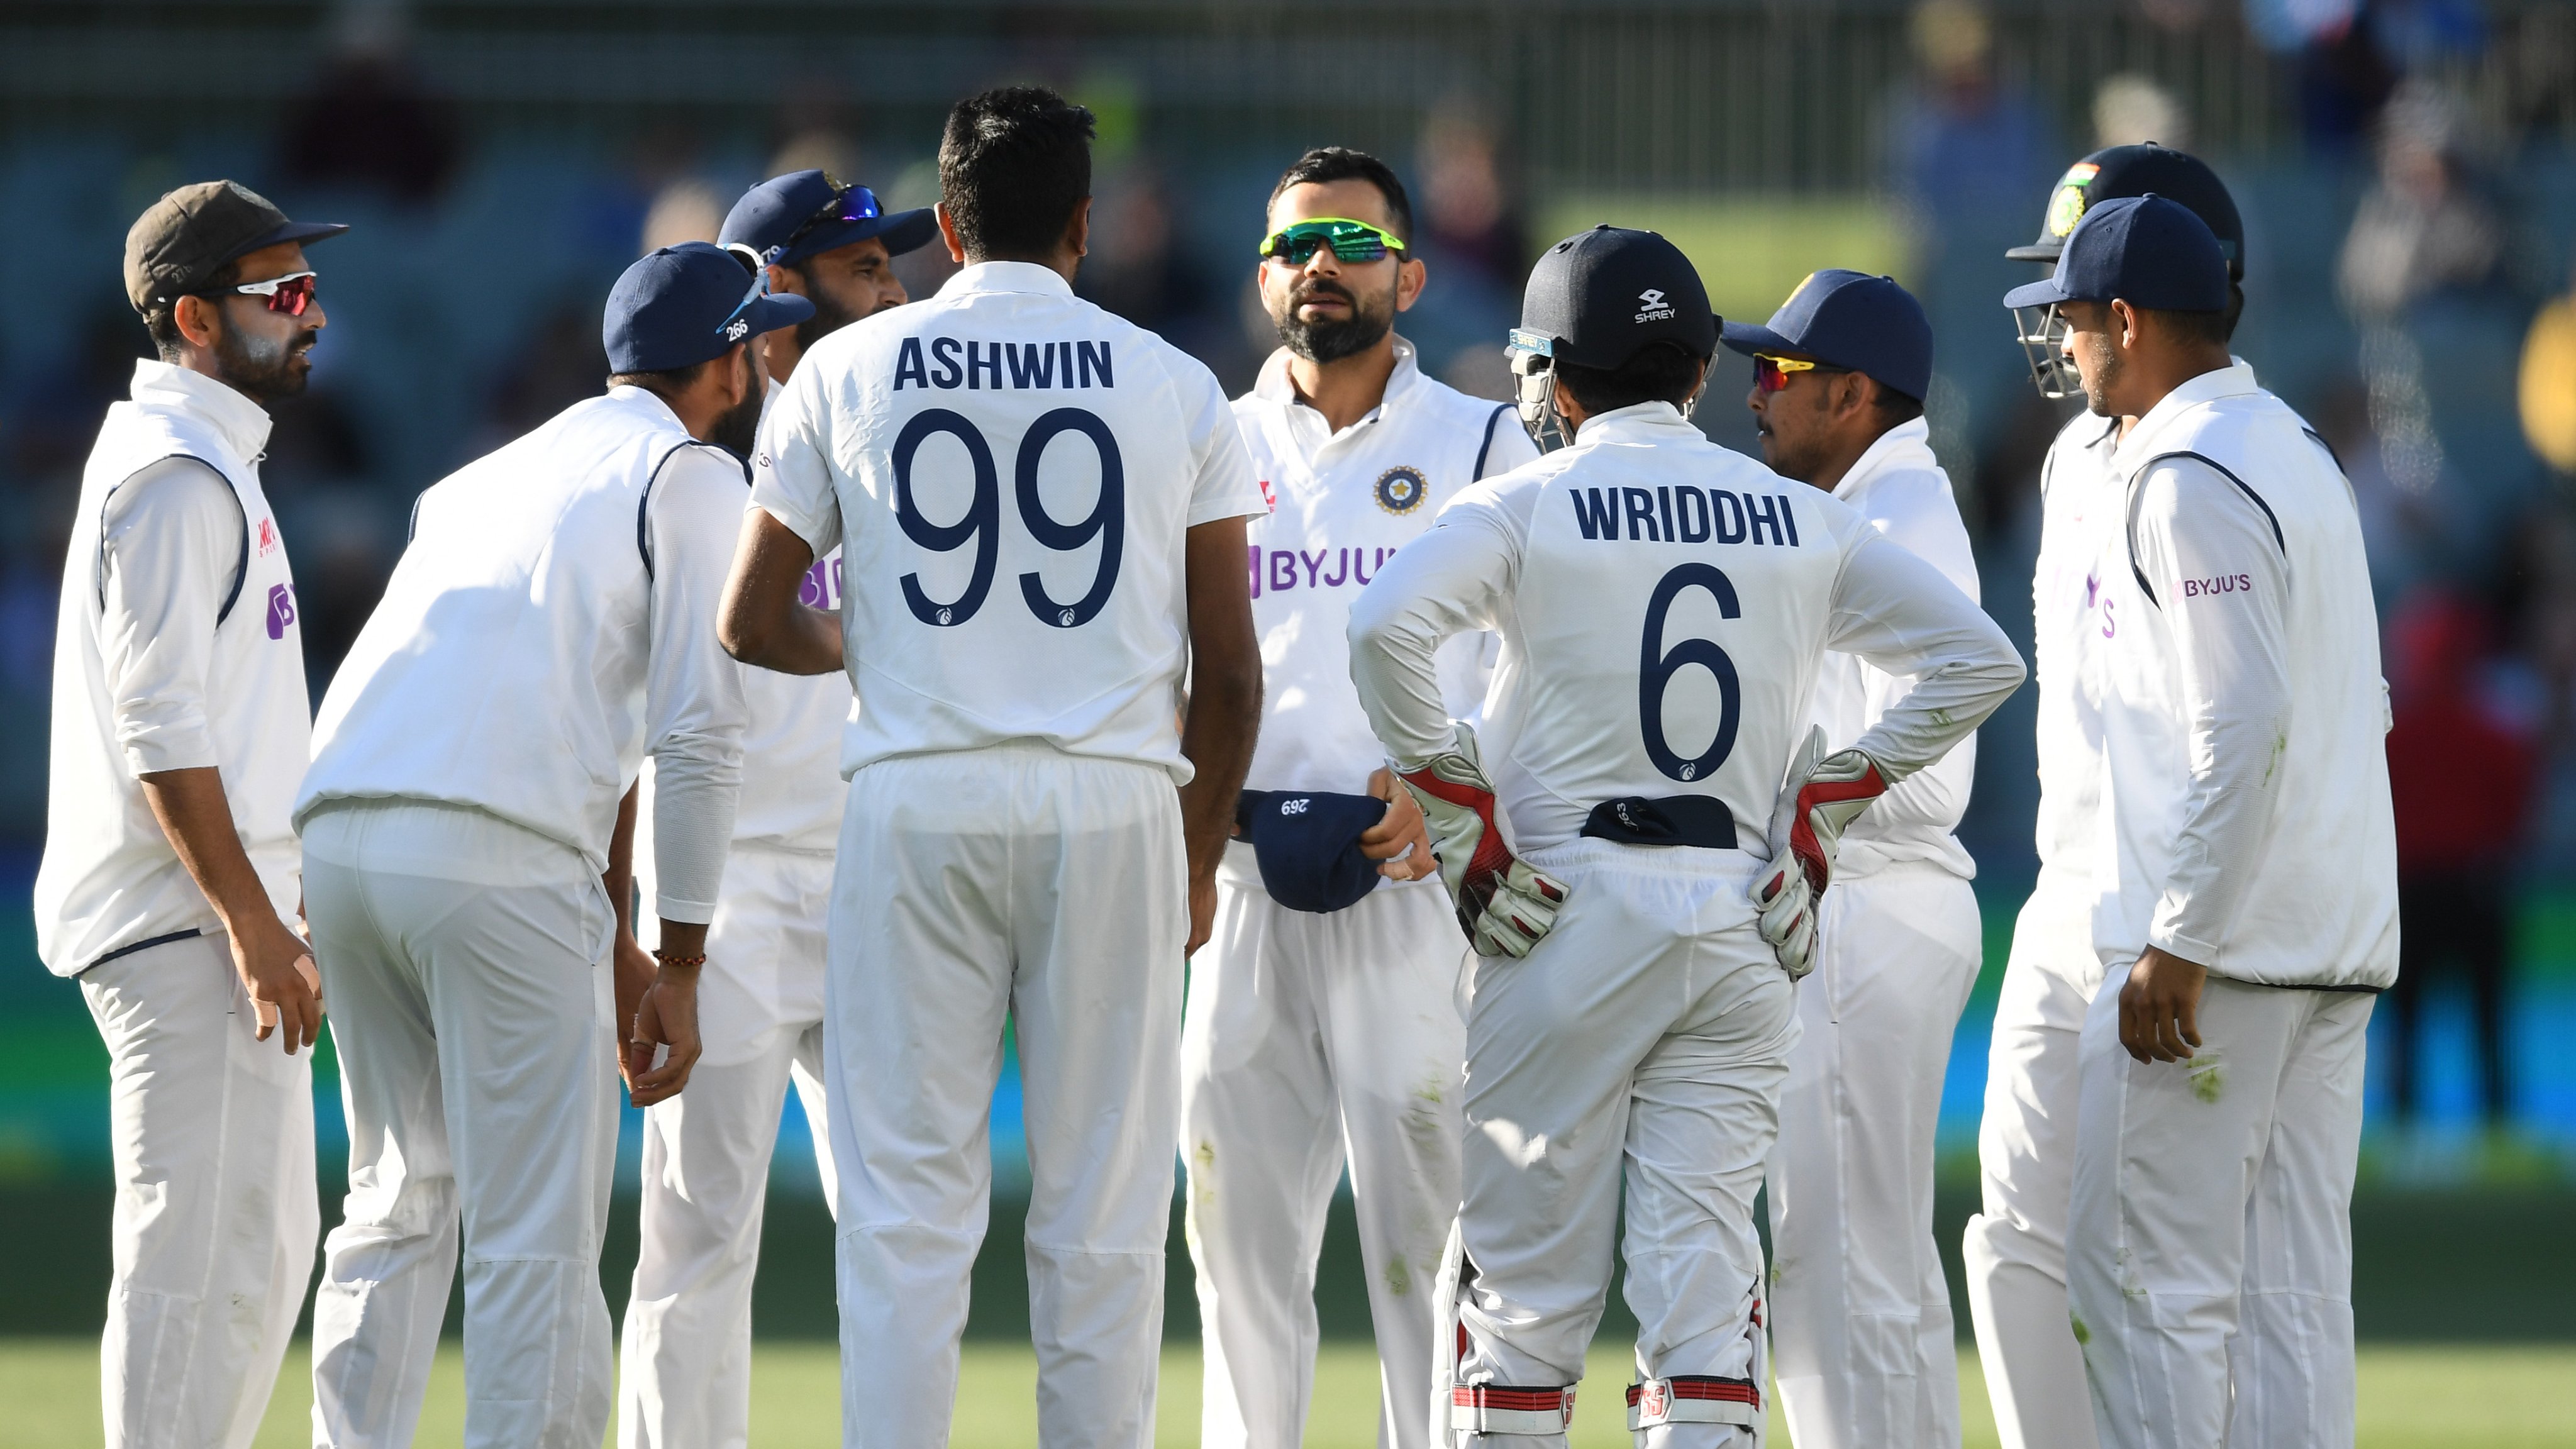 Australia dismisses India for their lowest ever test score